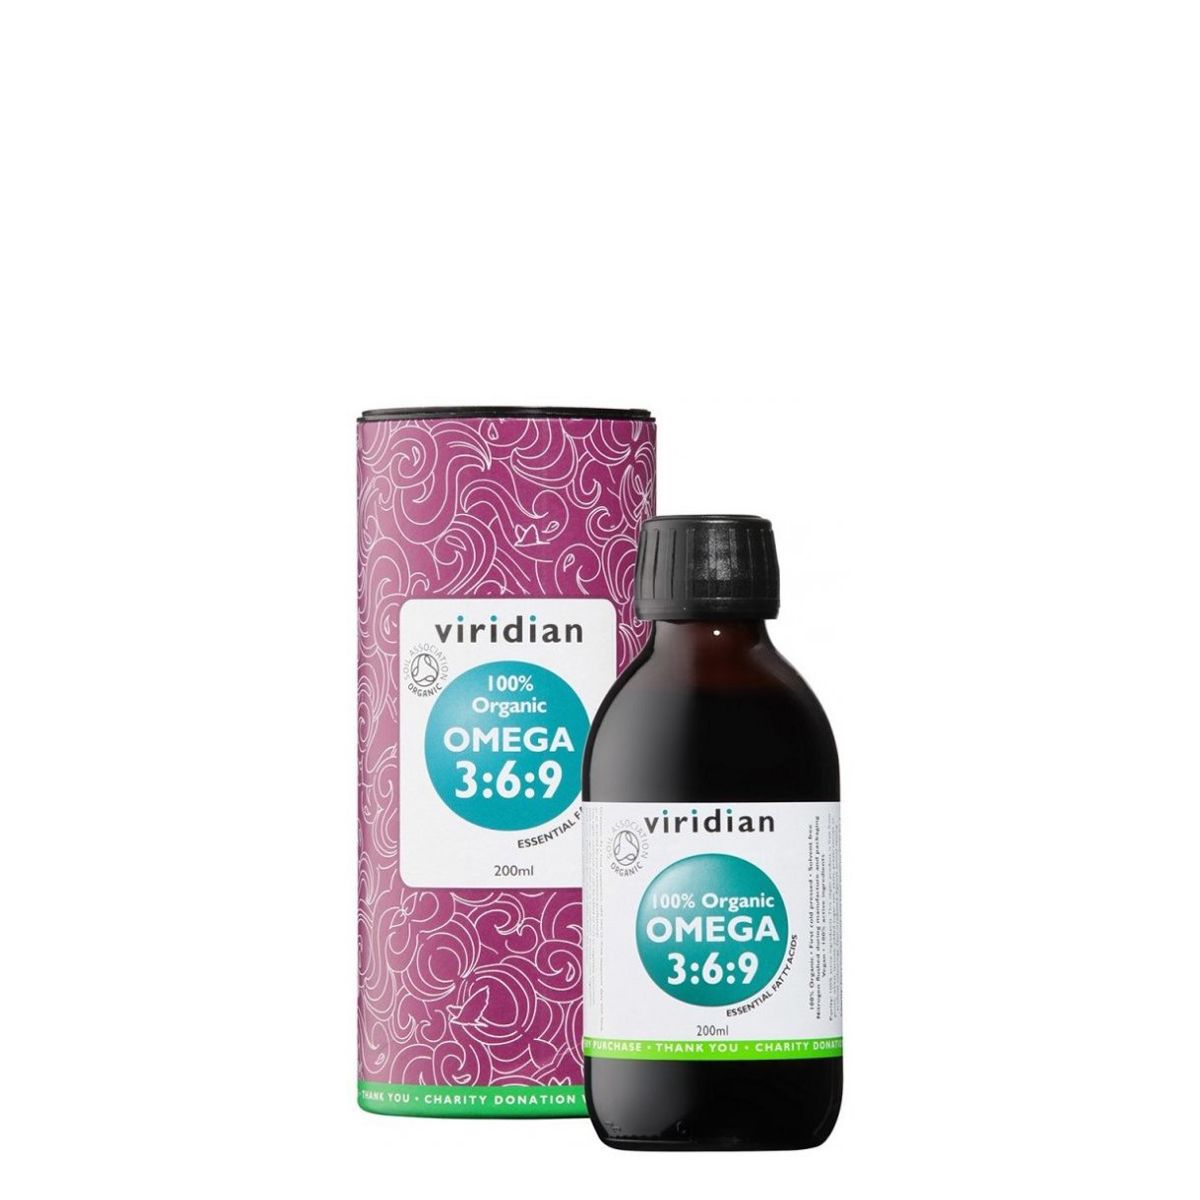 Bio omega 3-6-9 olaj, Viridian 100% Organic Omega 3-6-9, 200 ml